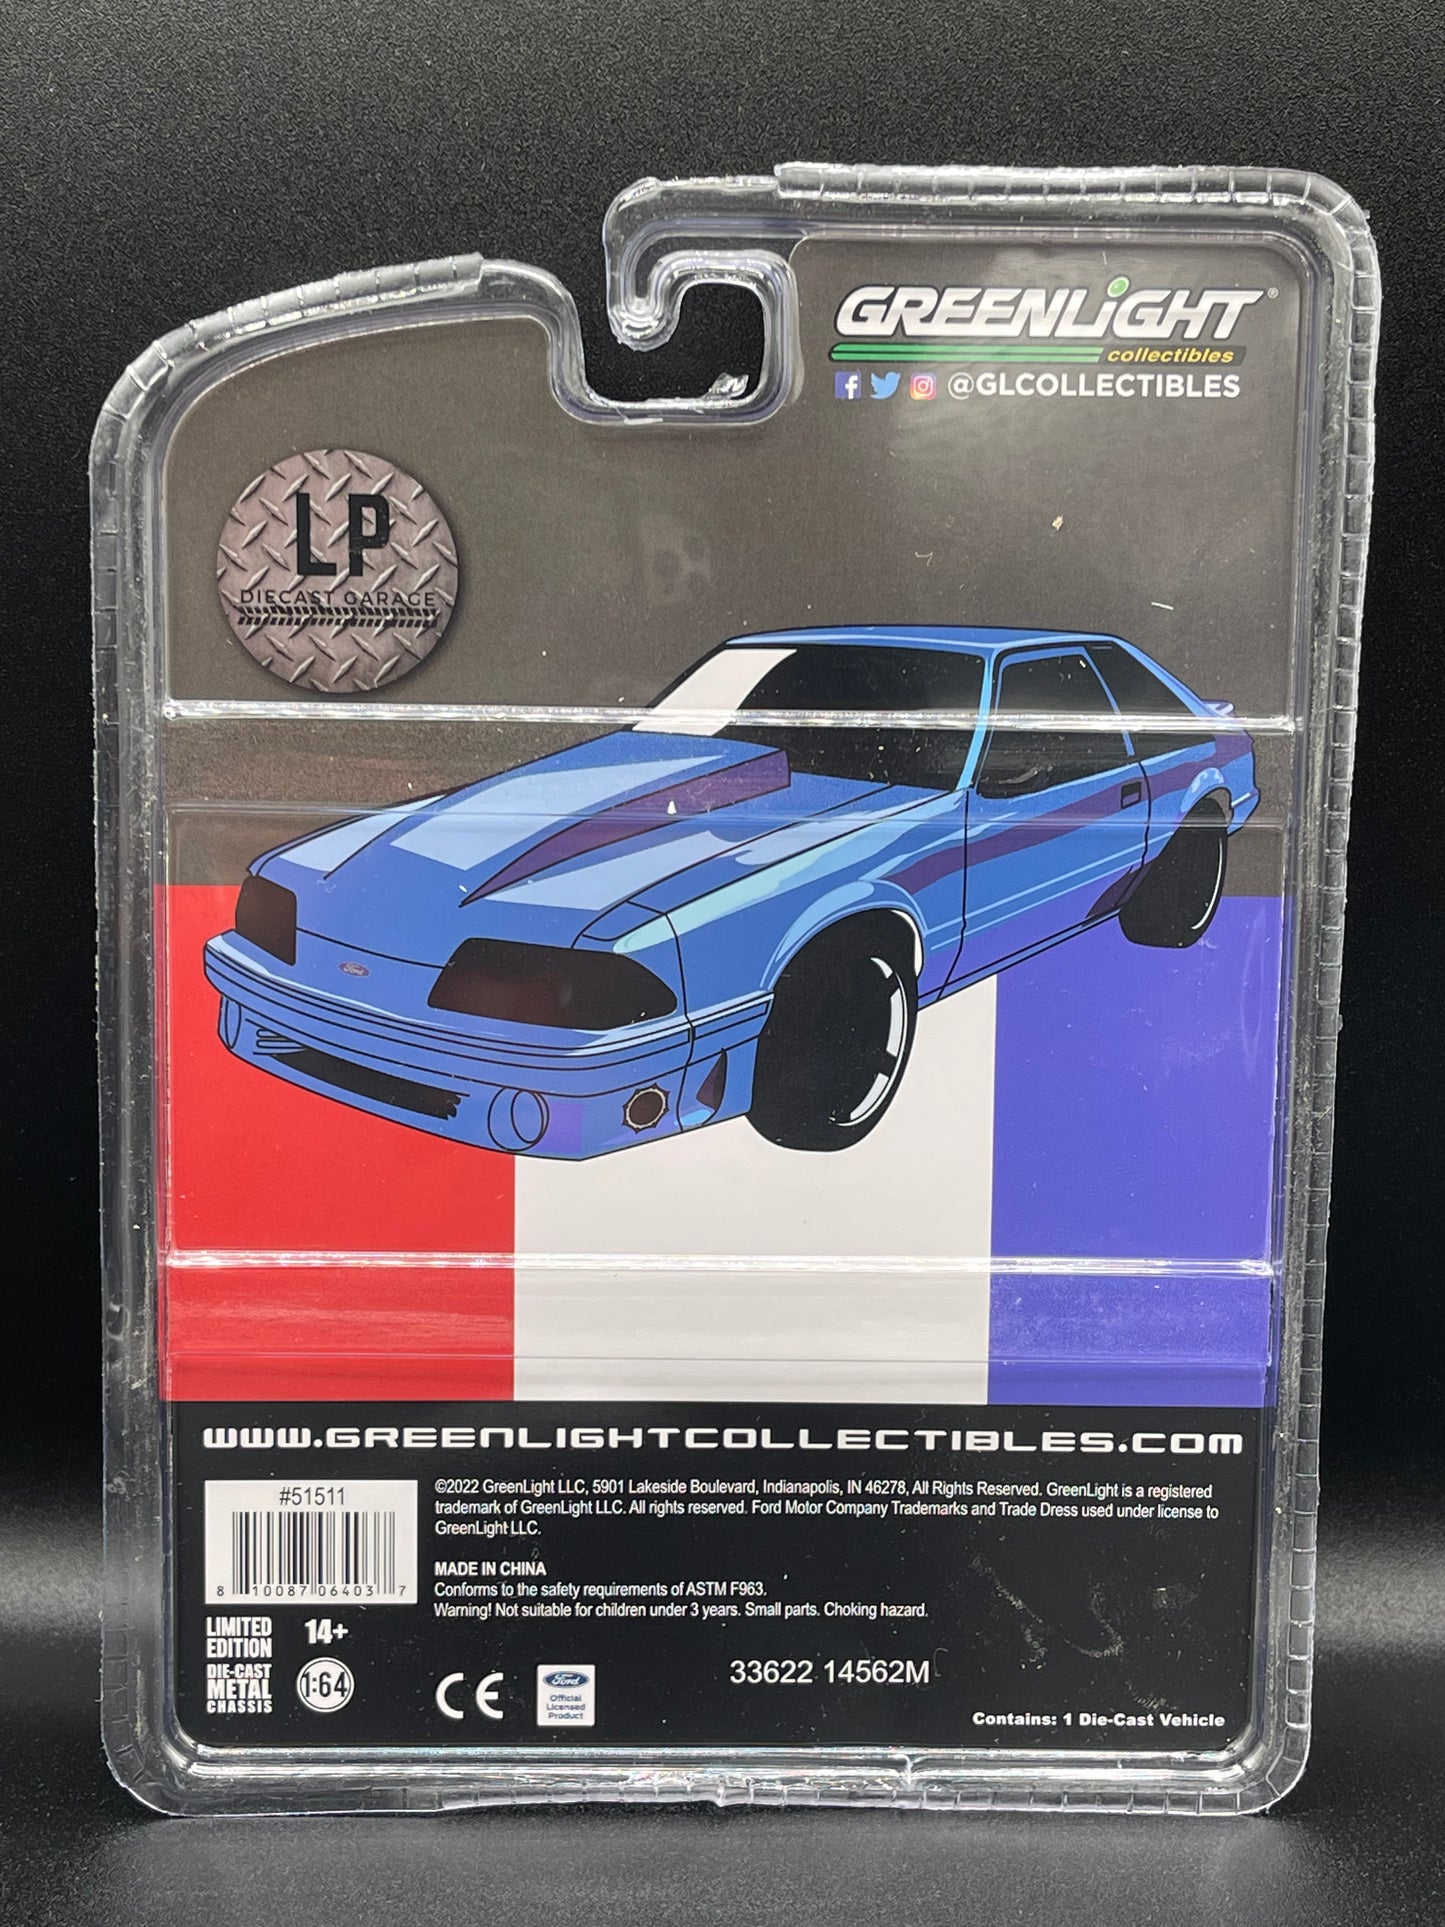 GREENLIGHT 1992 Ford Mustang GT Drag Car Green LP Diecast Garage Exclusive 1:64 Diecast Promo *GREEN MACHINE*